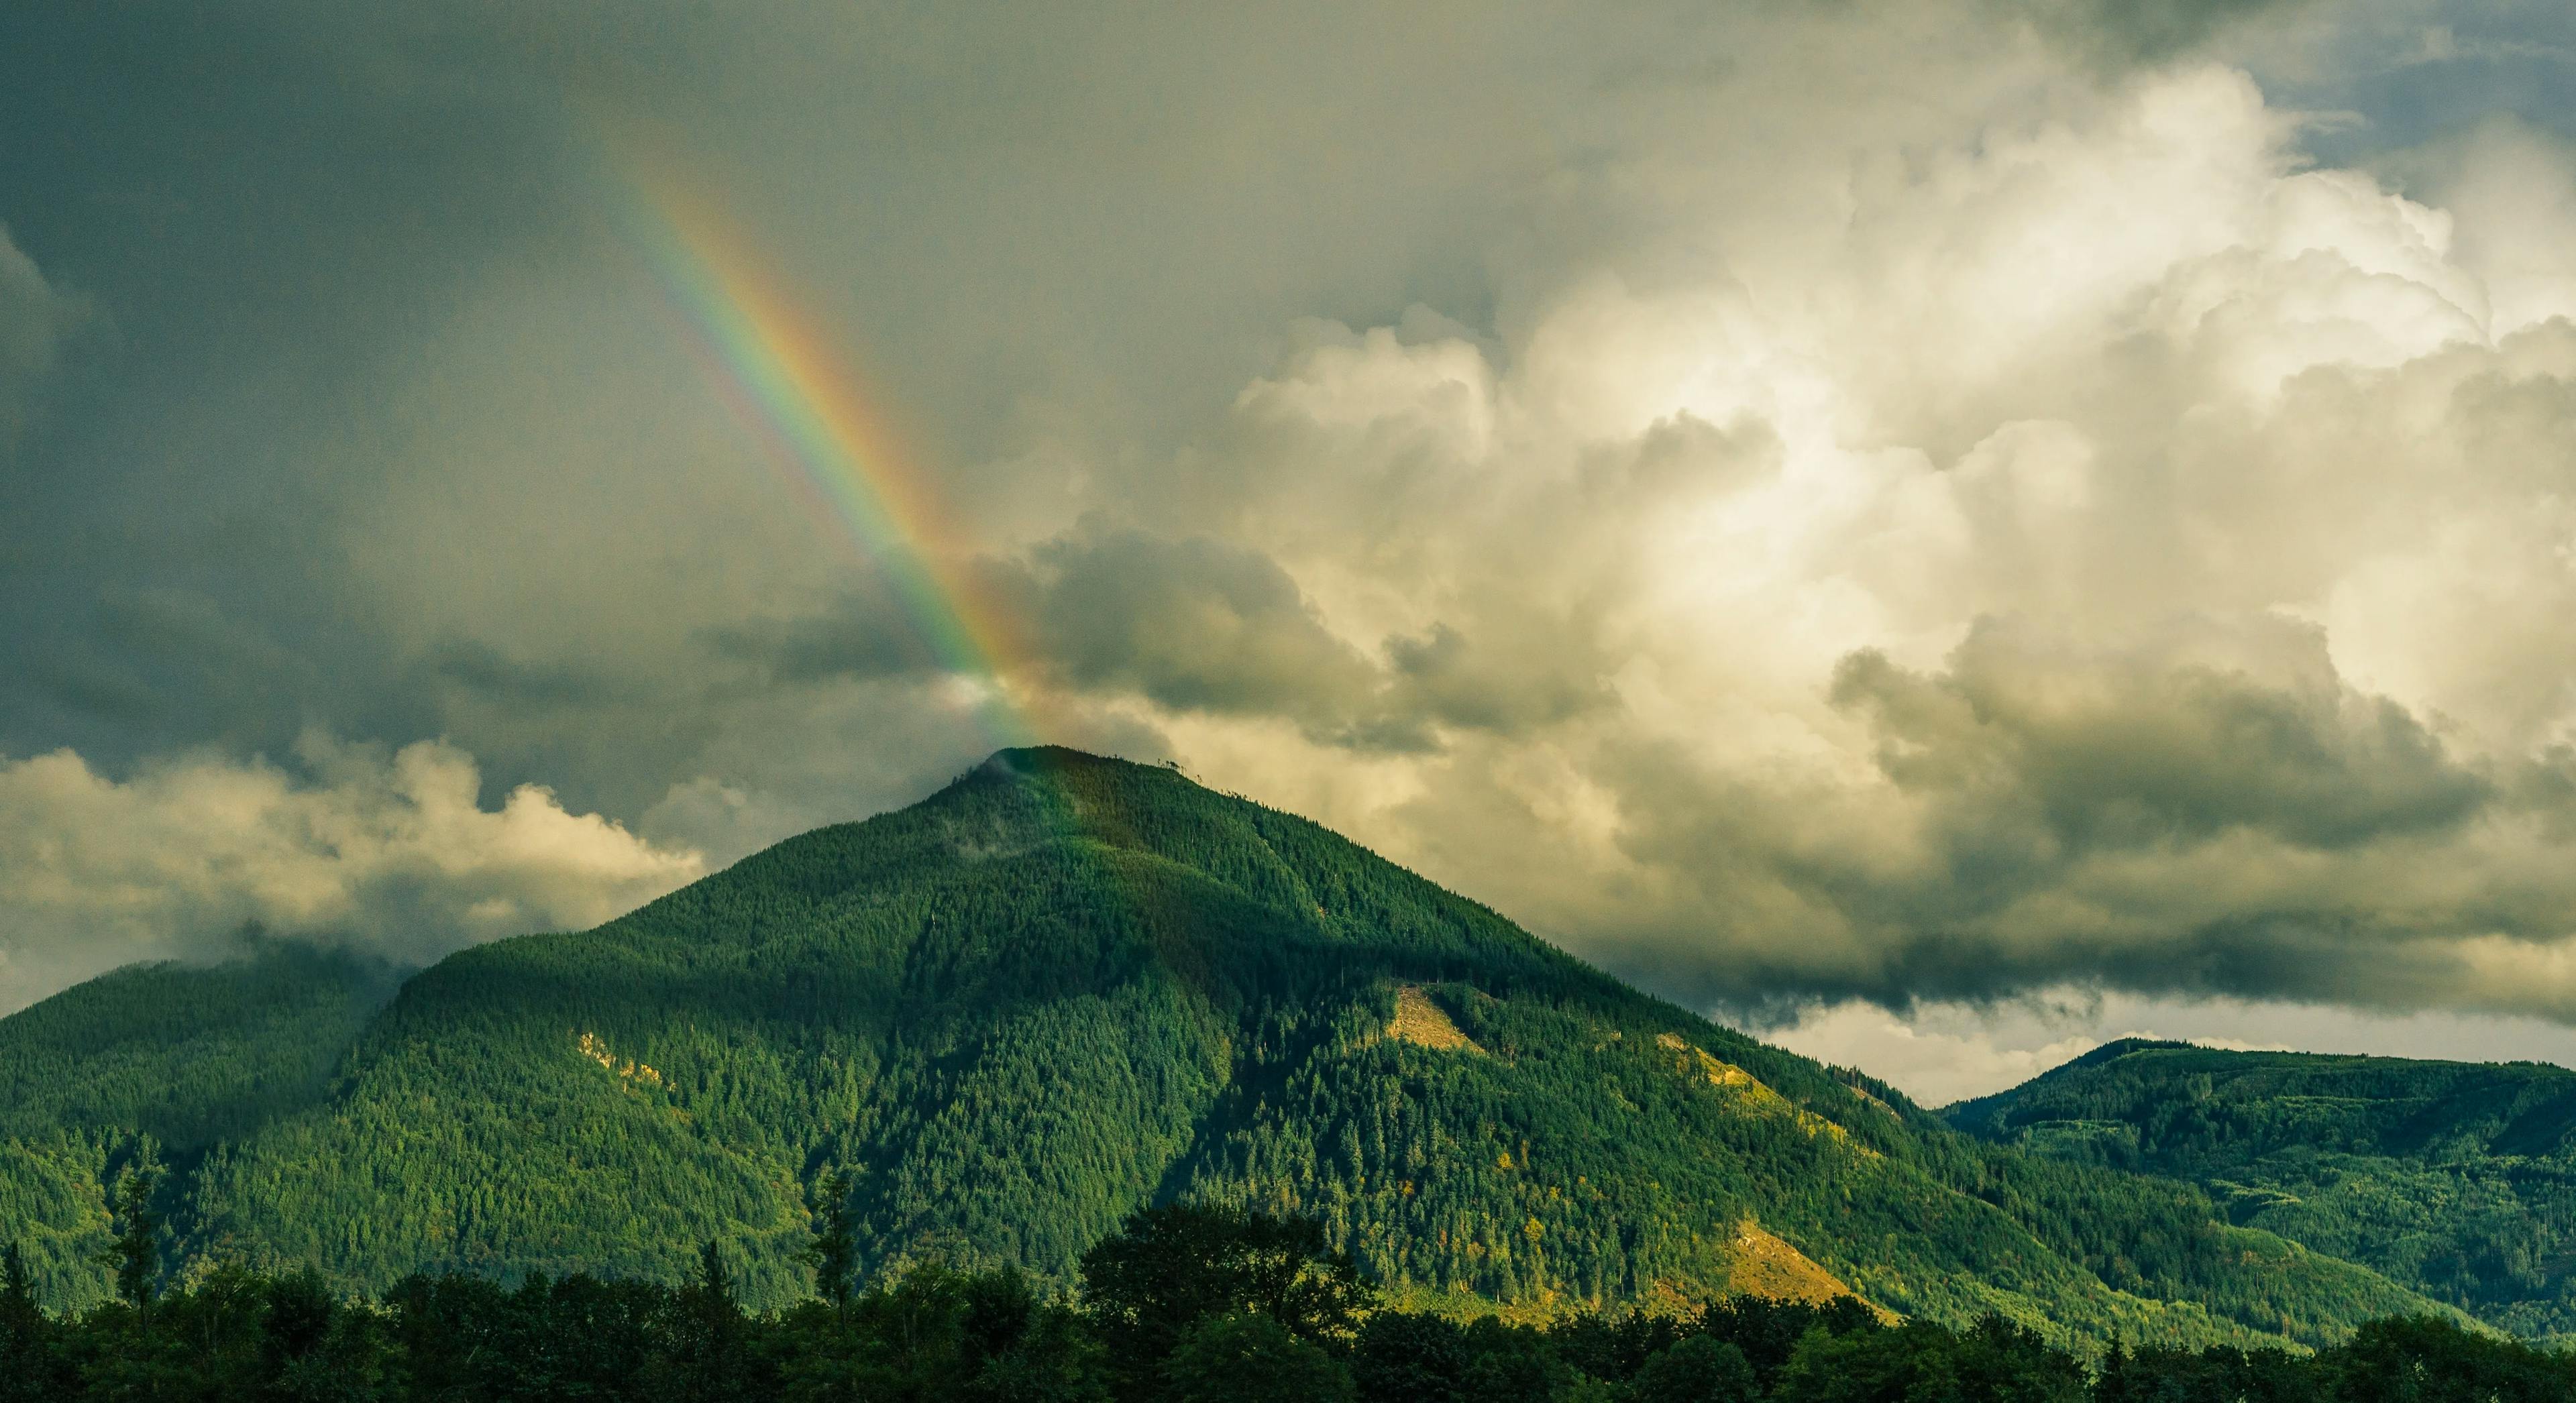 Kurinjal Trekking Adventure: Green Mountains and Colorful Rainbow